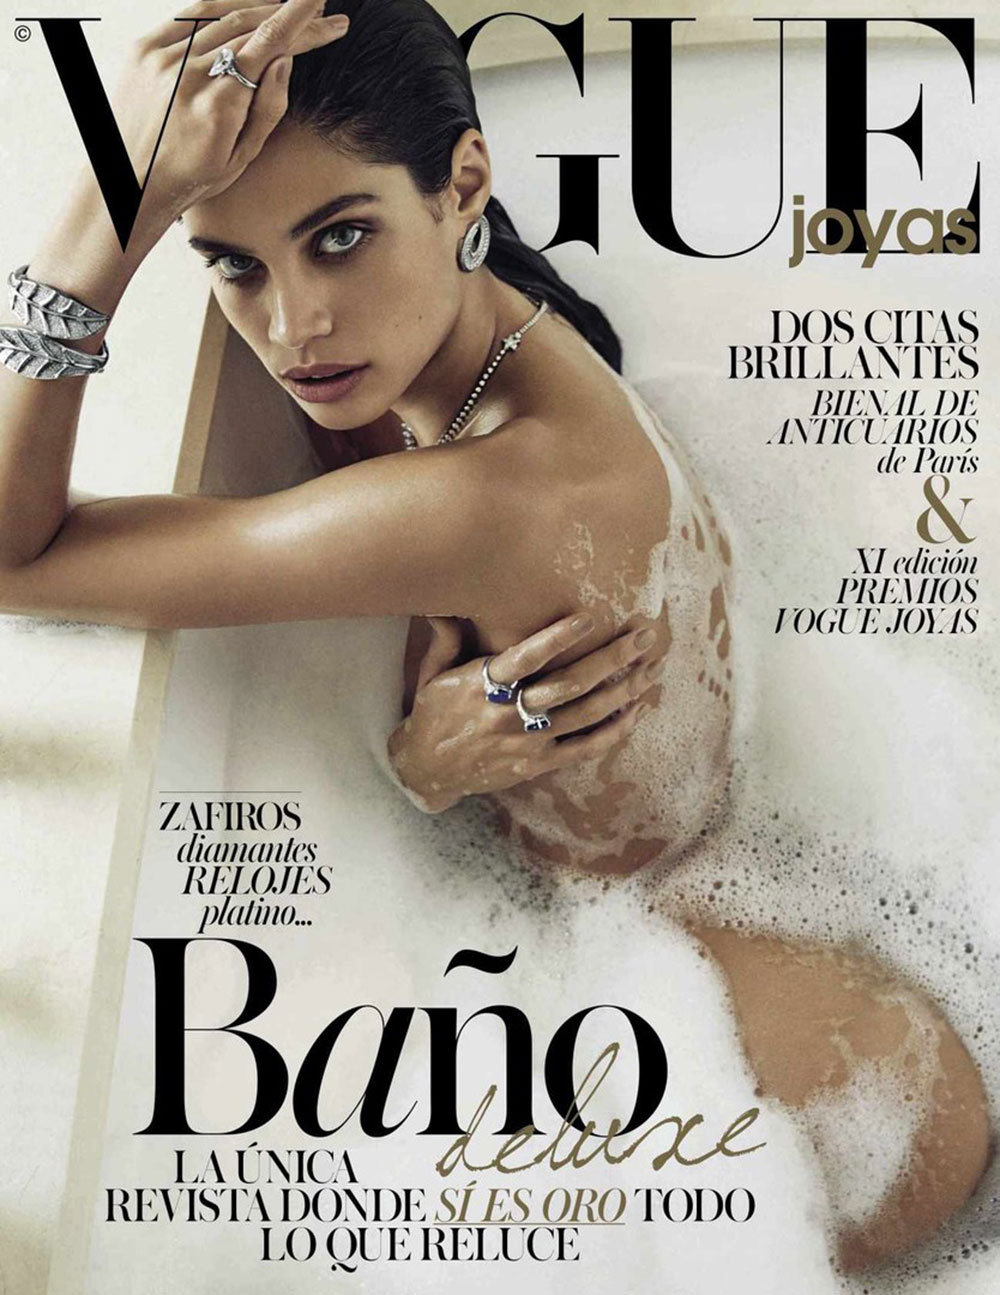 SARA SAMPAIO on the Cover Vogue Joyas Magazine